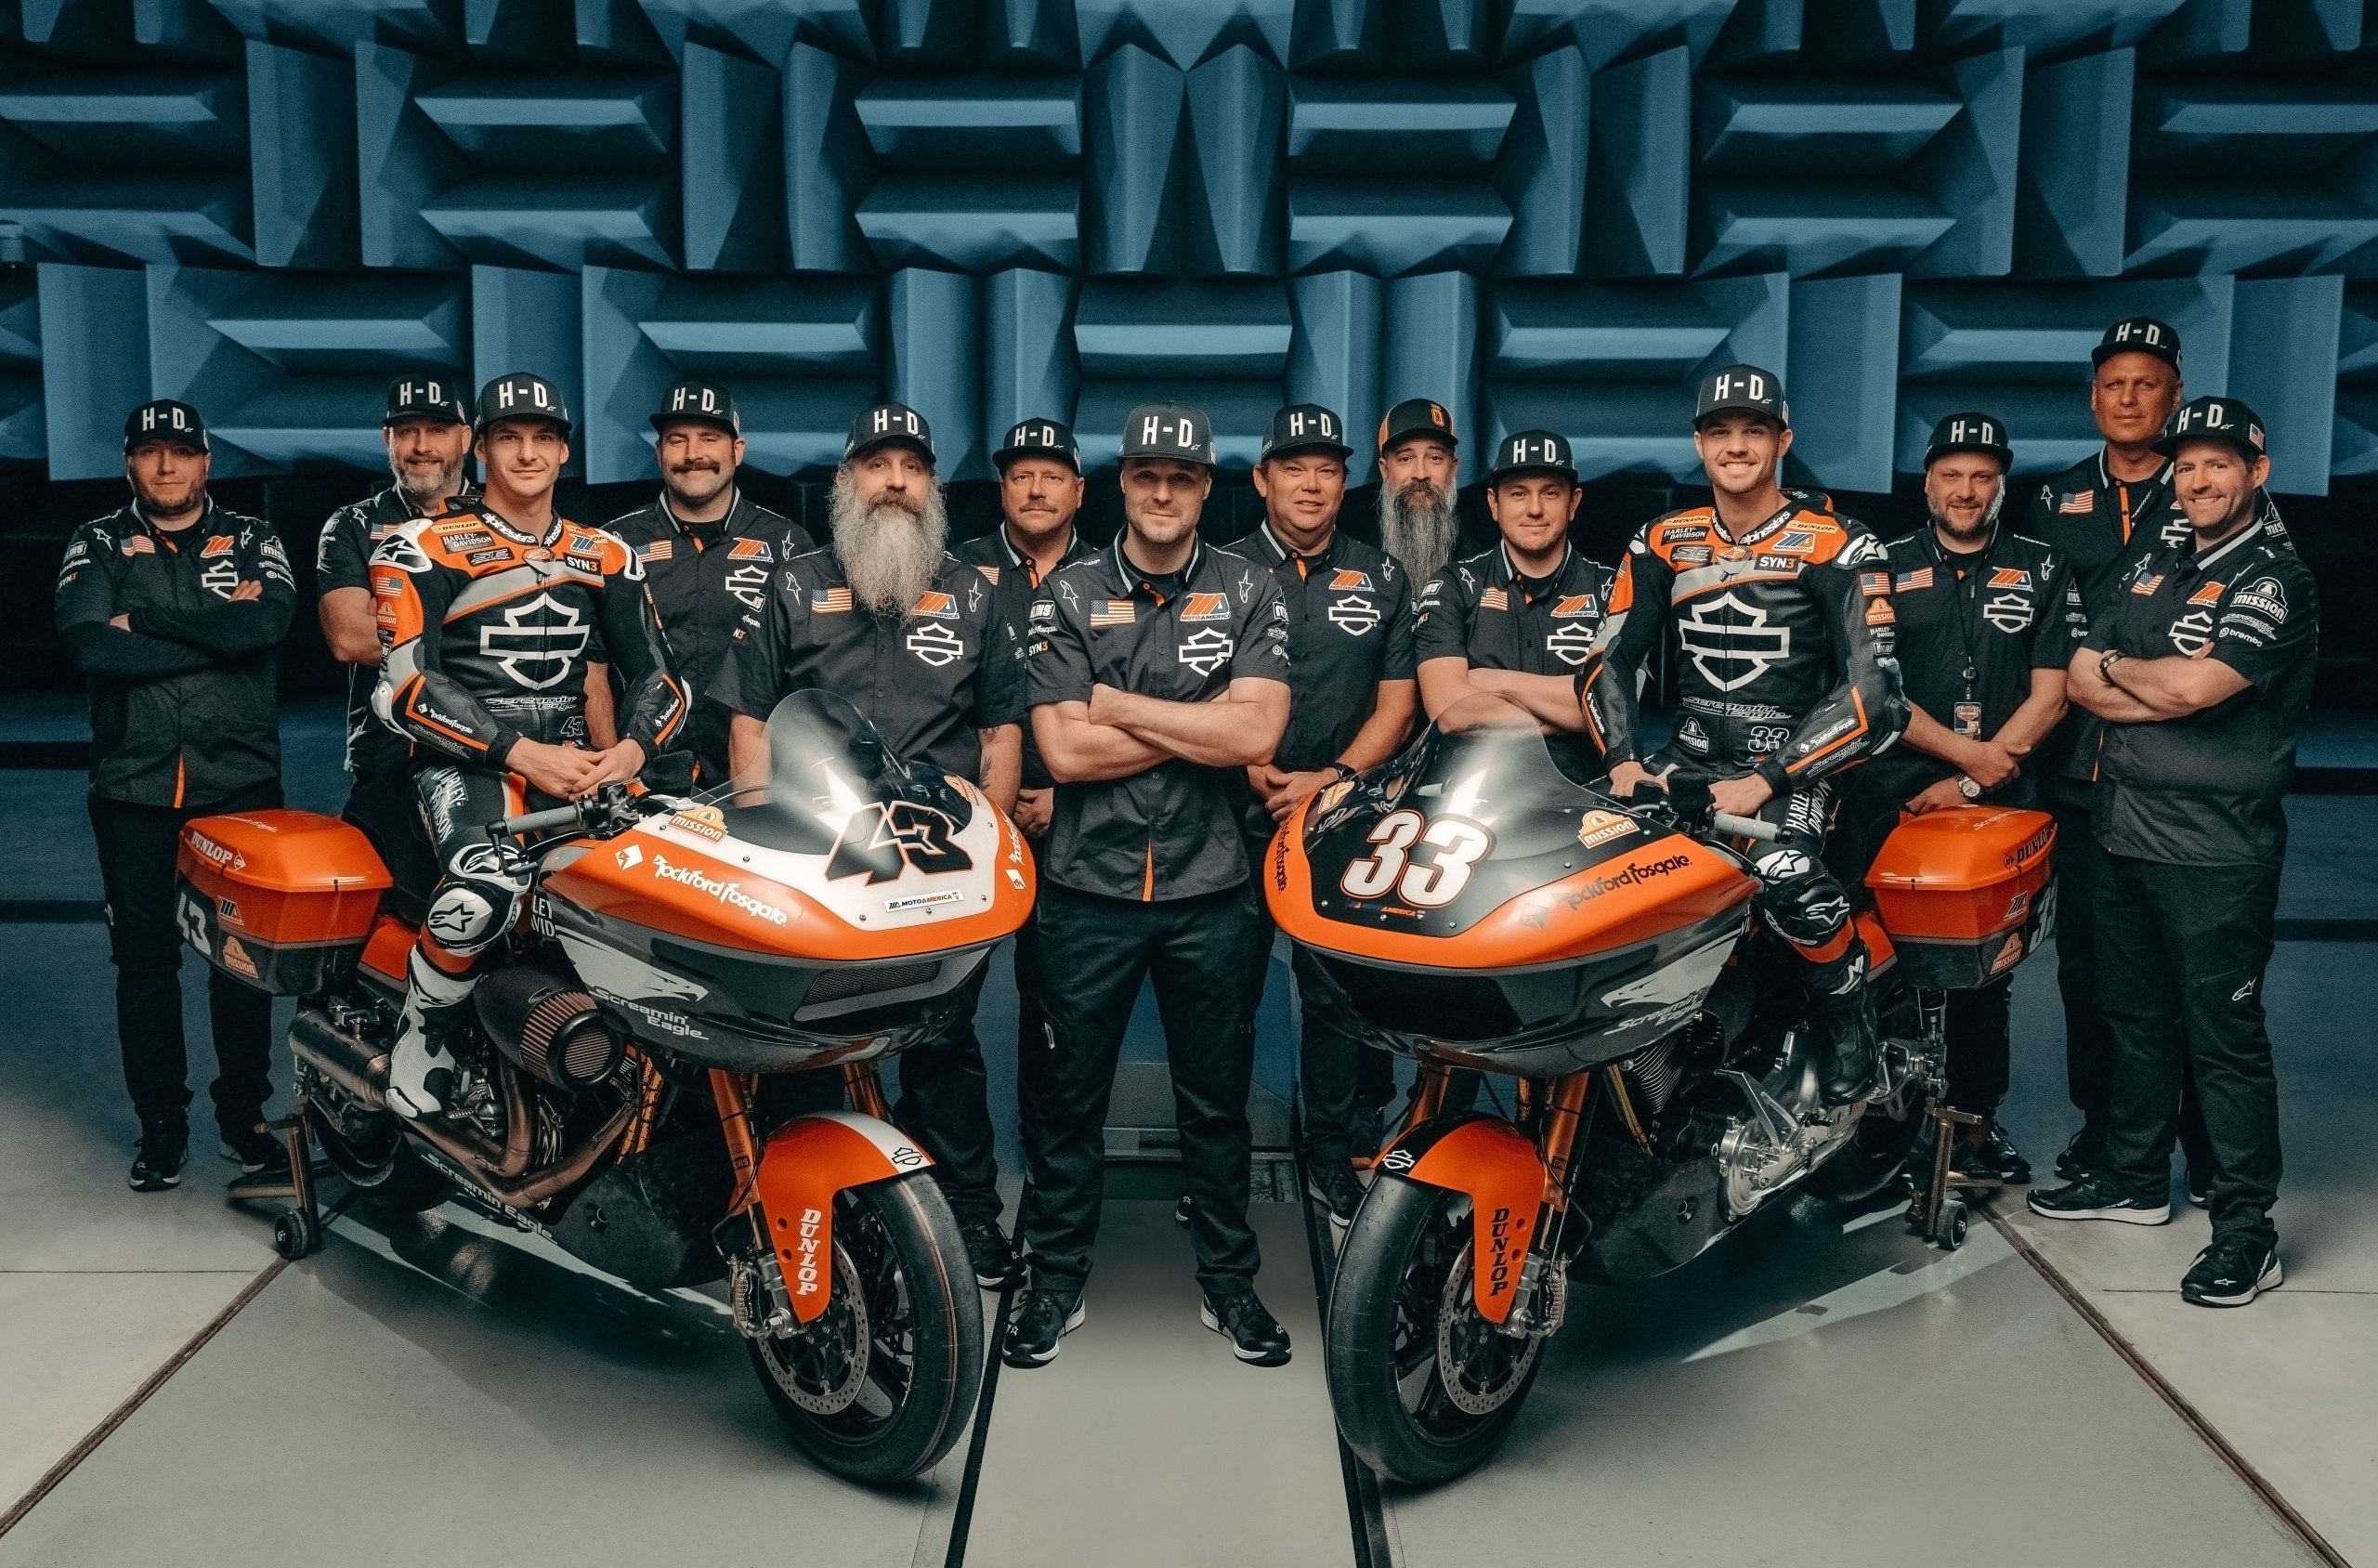 Harley Davidson King of Baggers Team - By Viking Bags